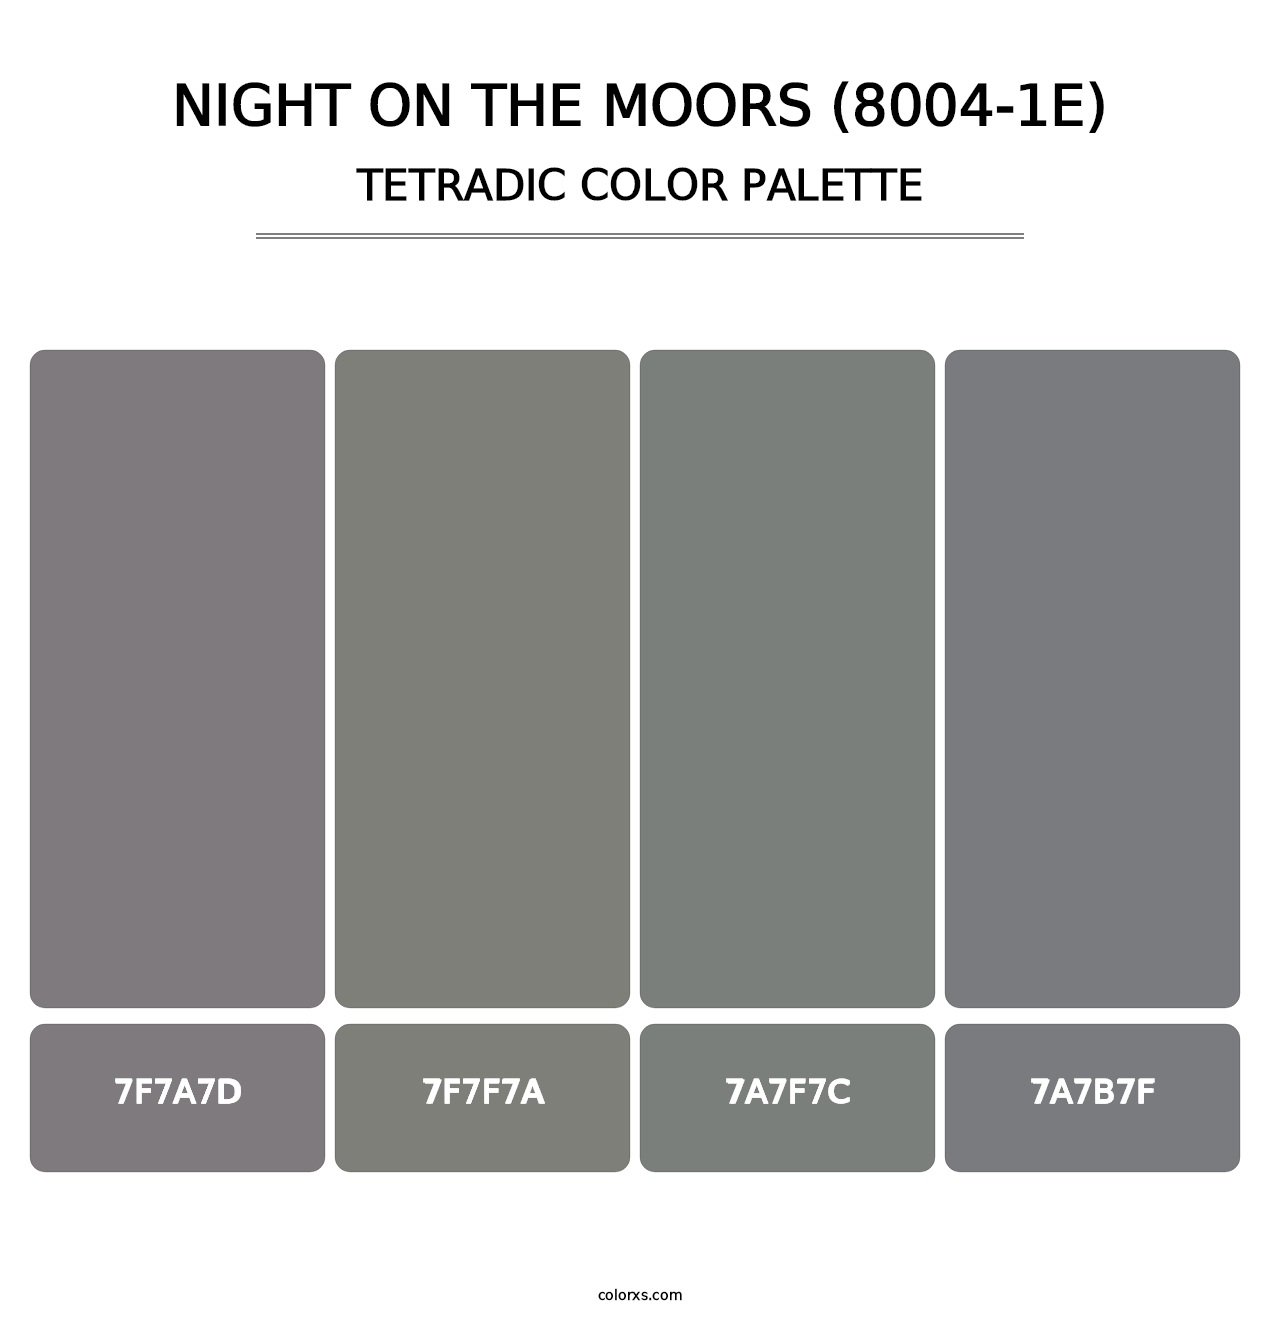 Night on the Moors (8004-1E) - Tetradic Color Palette